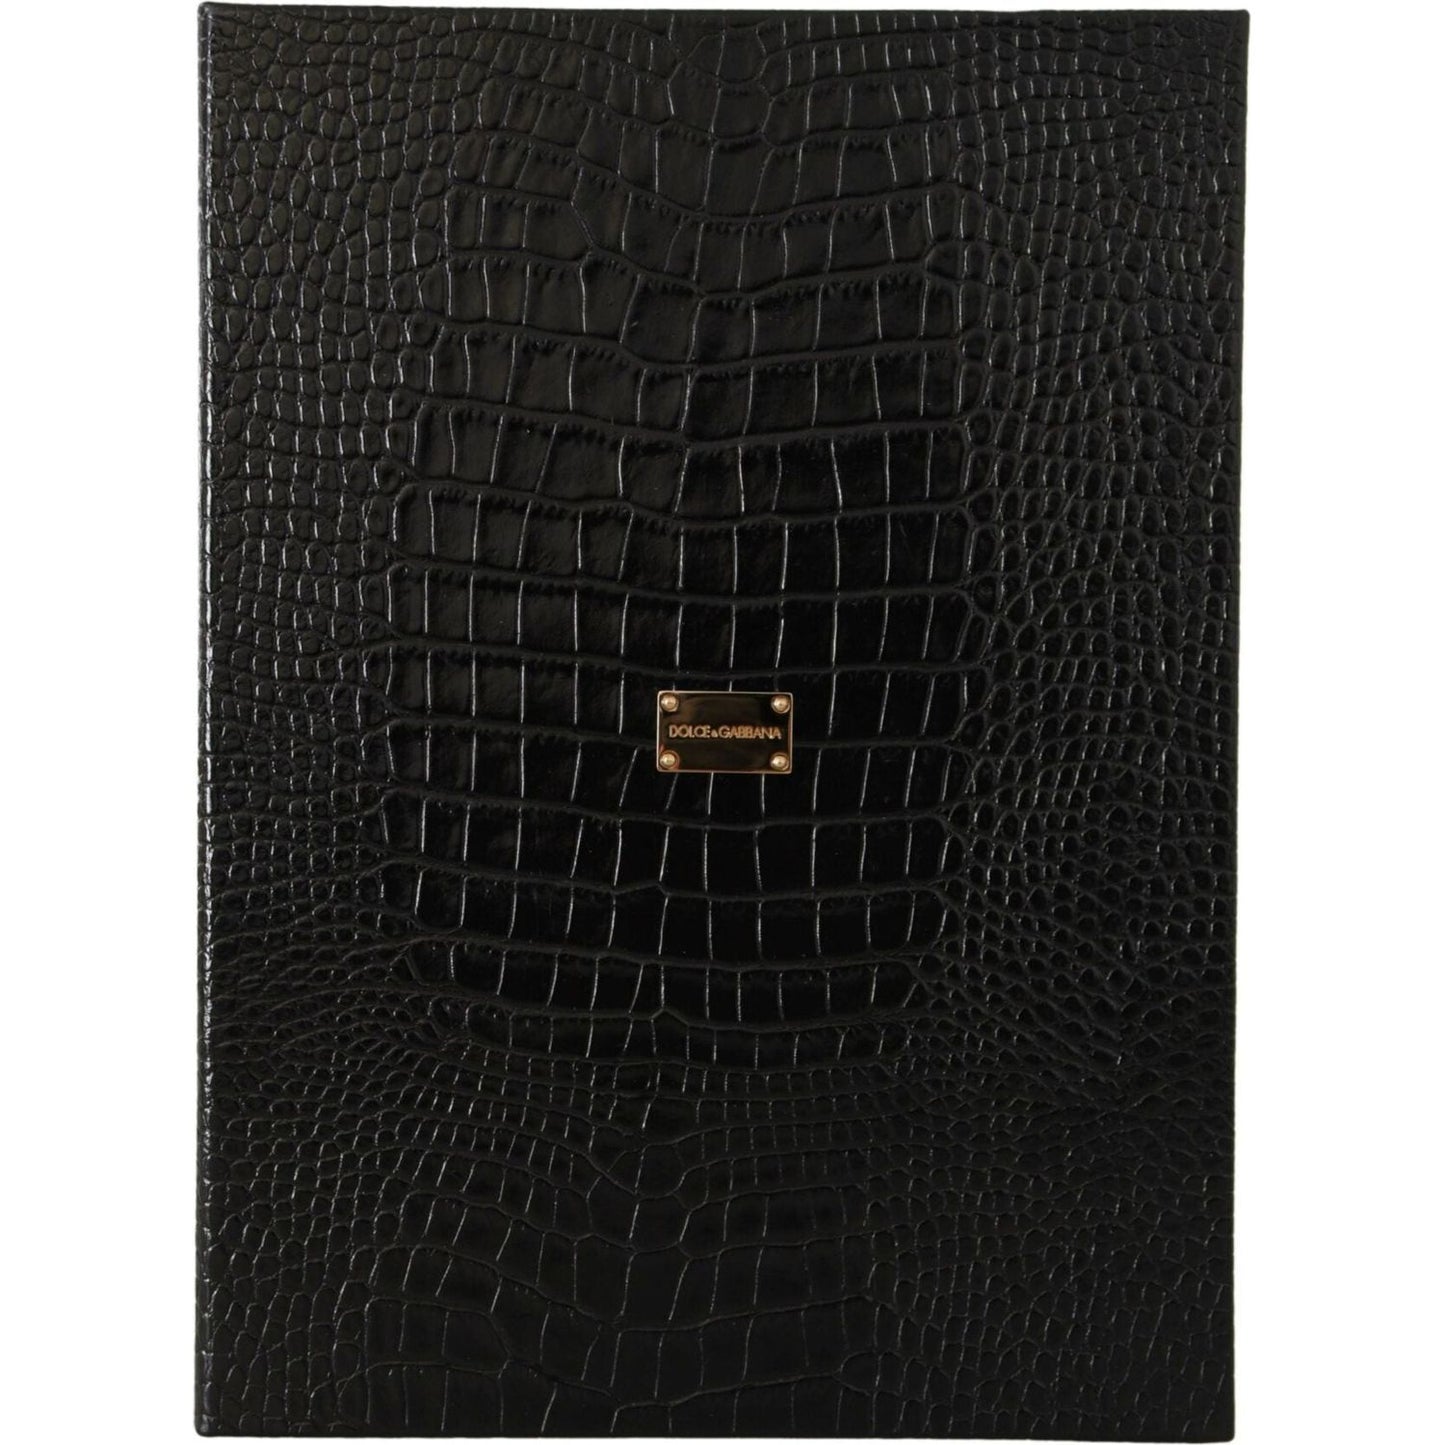 Dolce & Gabbana Elegant Black Leather Catalogue Case black-leather-booklet-decor-mens-case-catalogue-folding-book